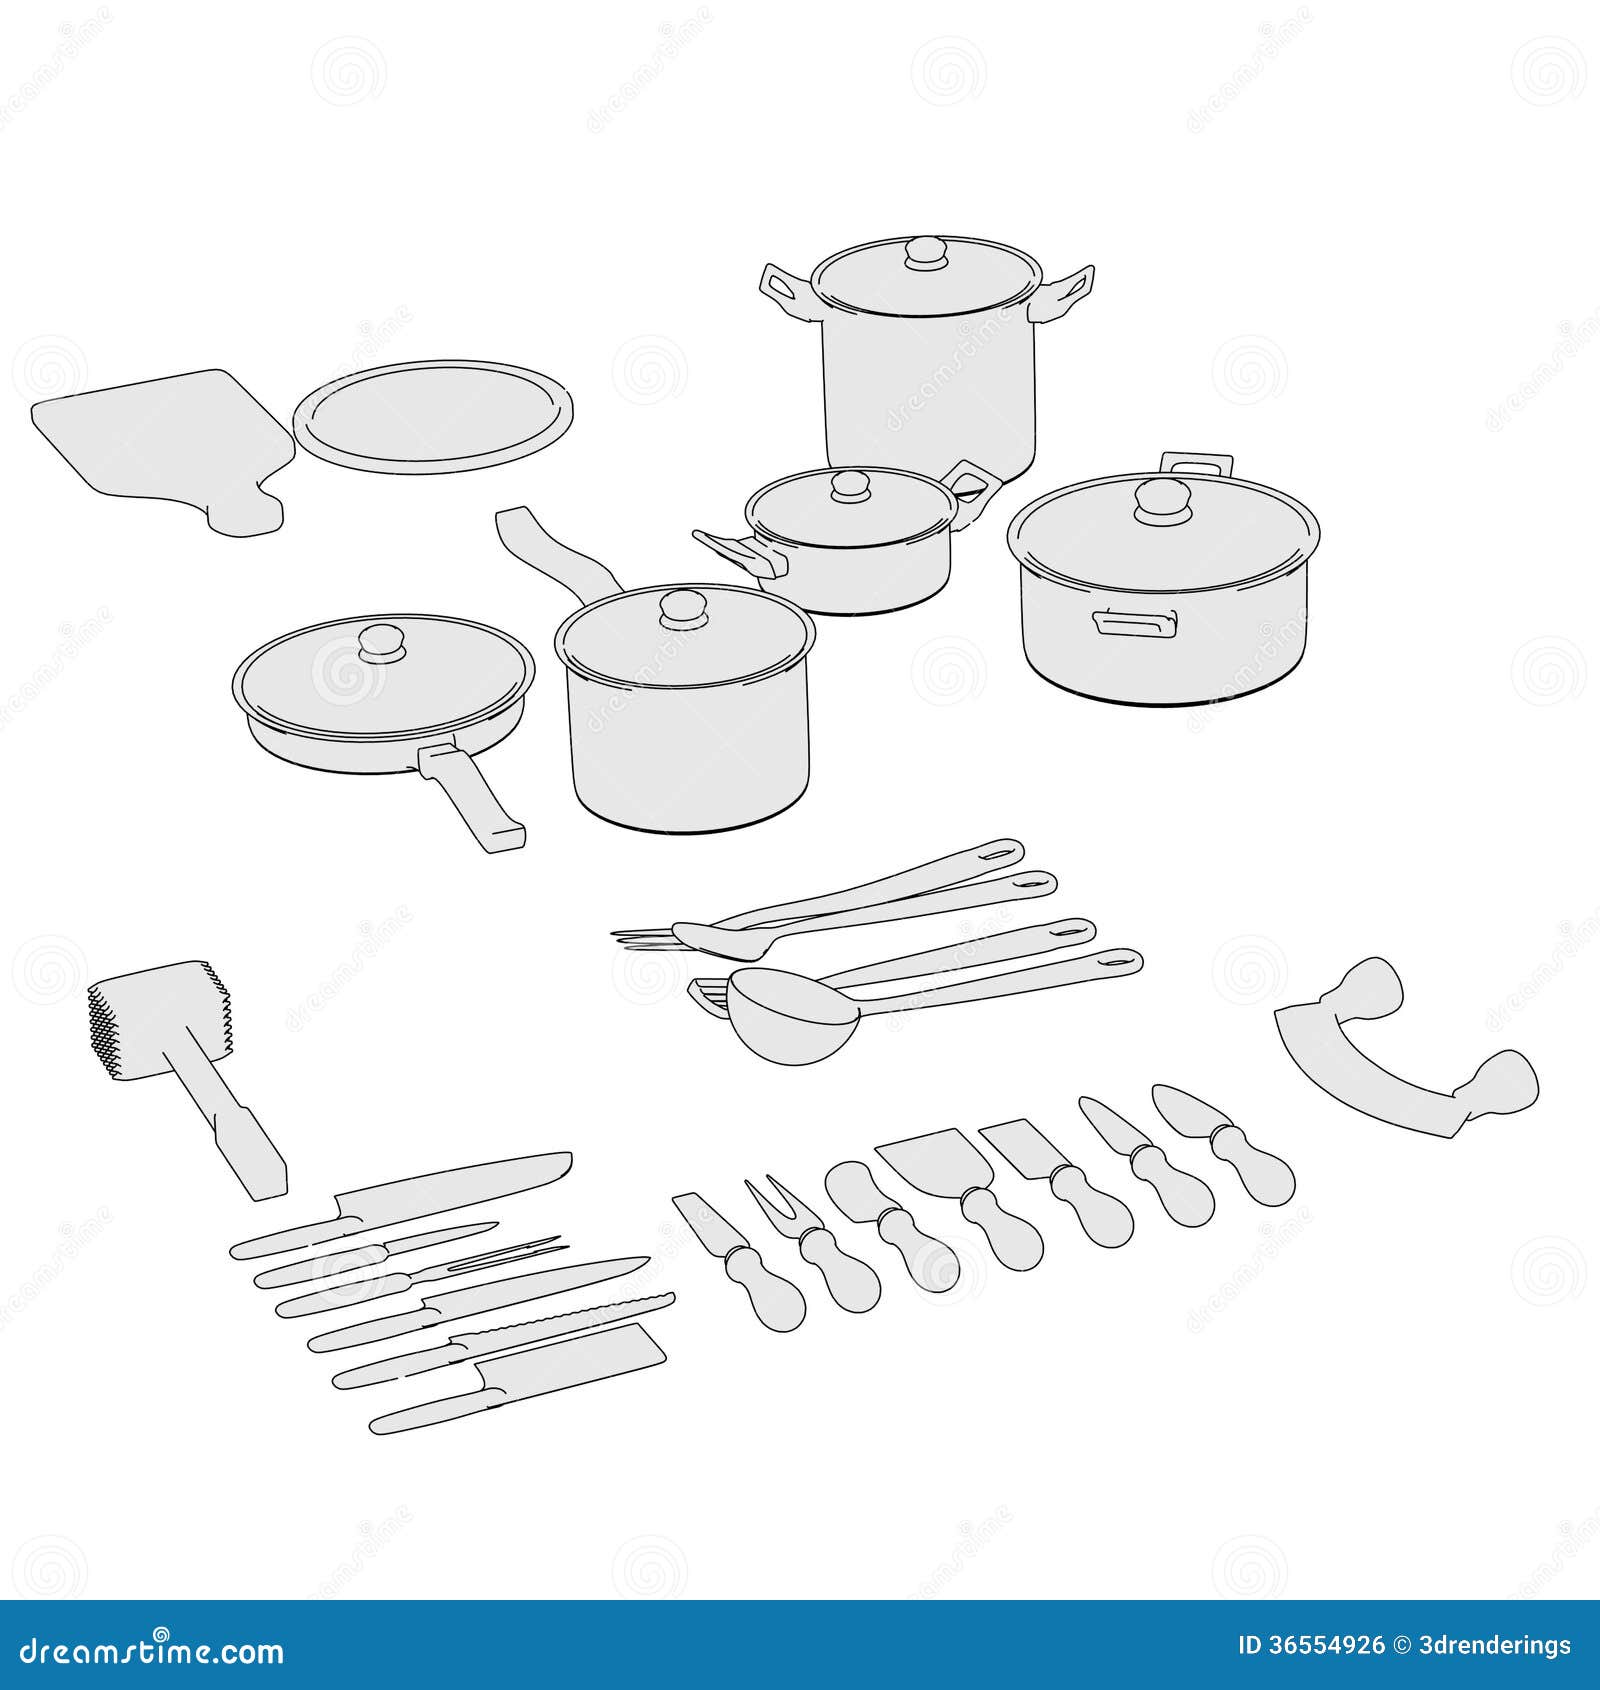 Cartoon image of cookware set